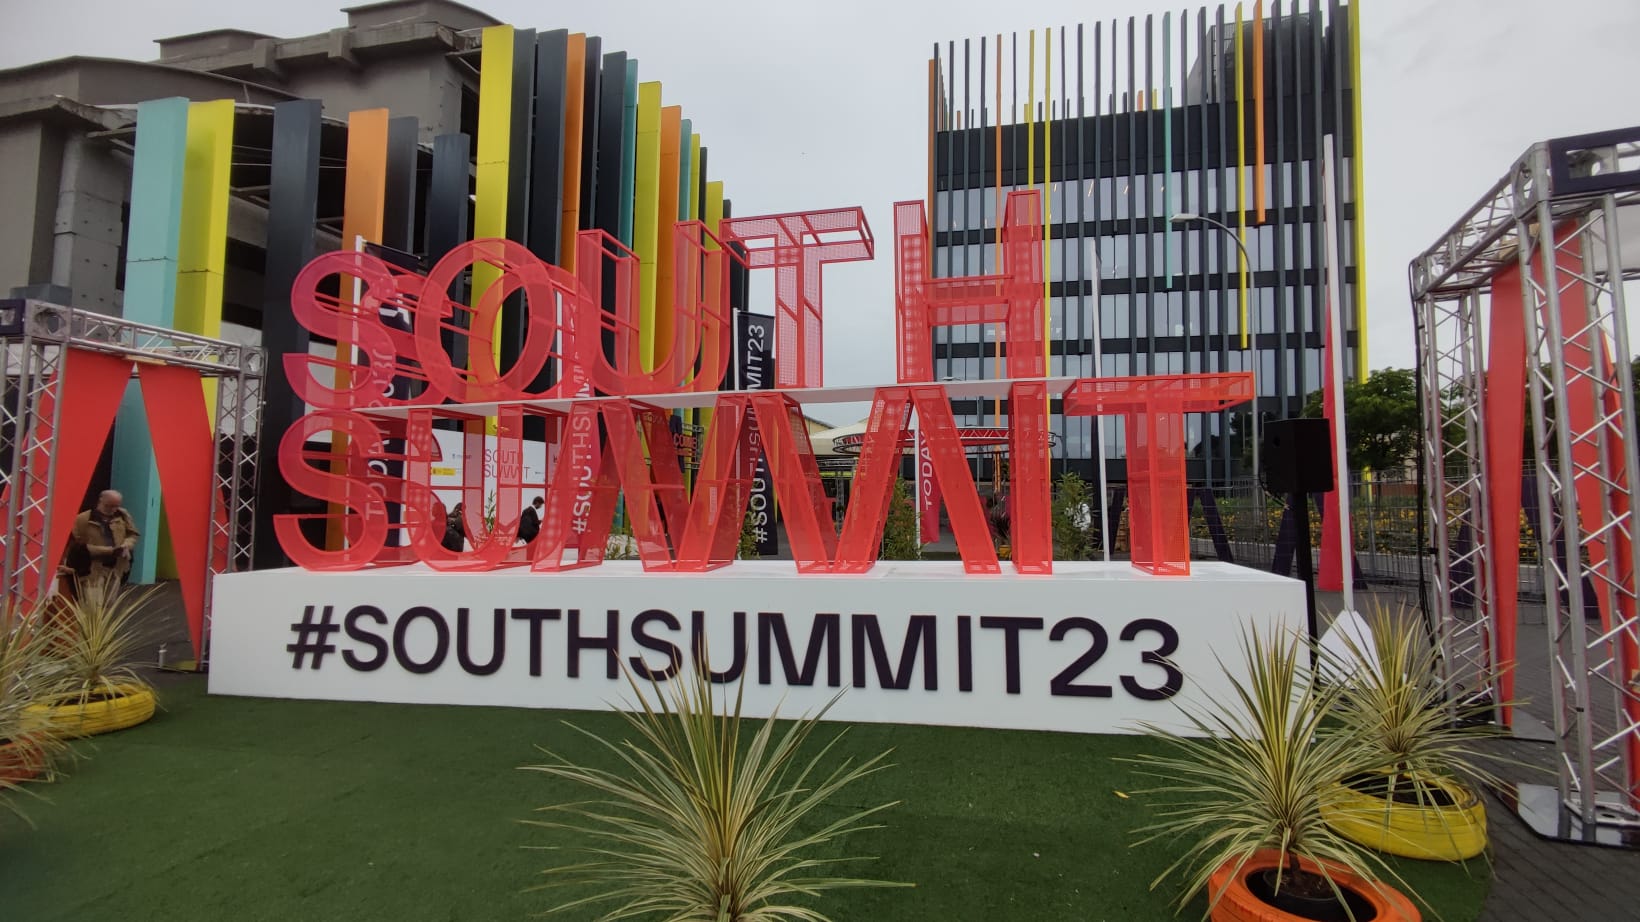 South Summit 23